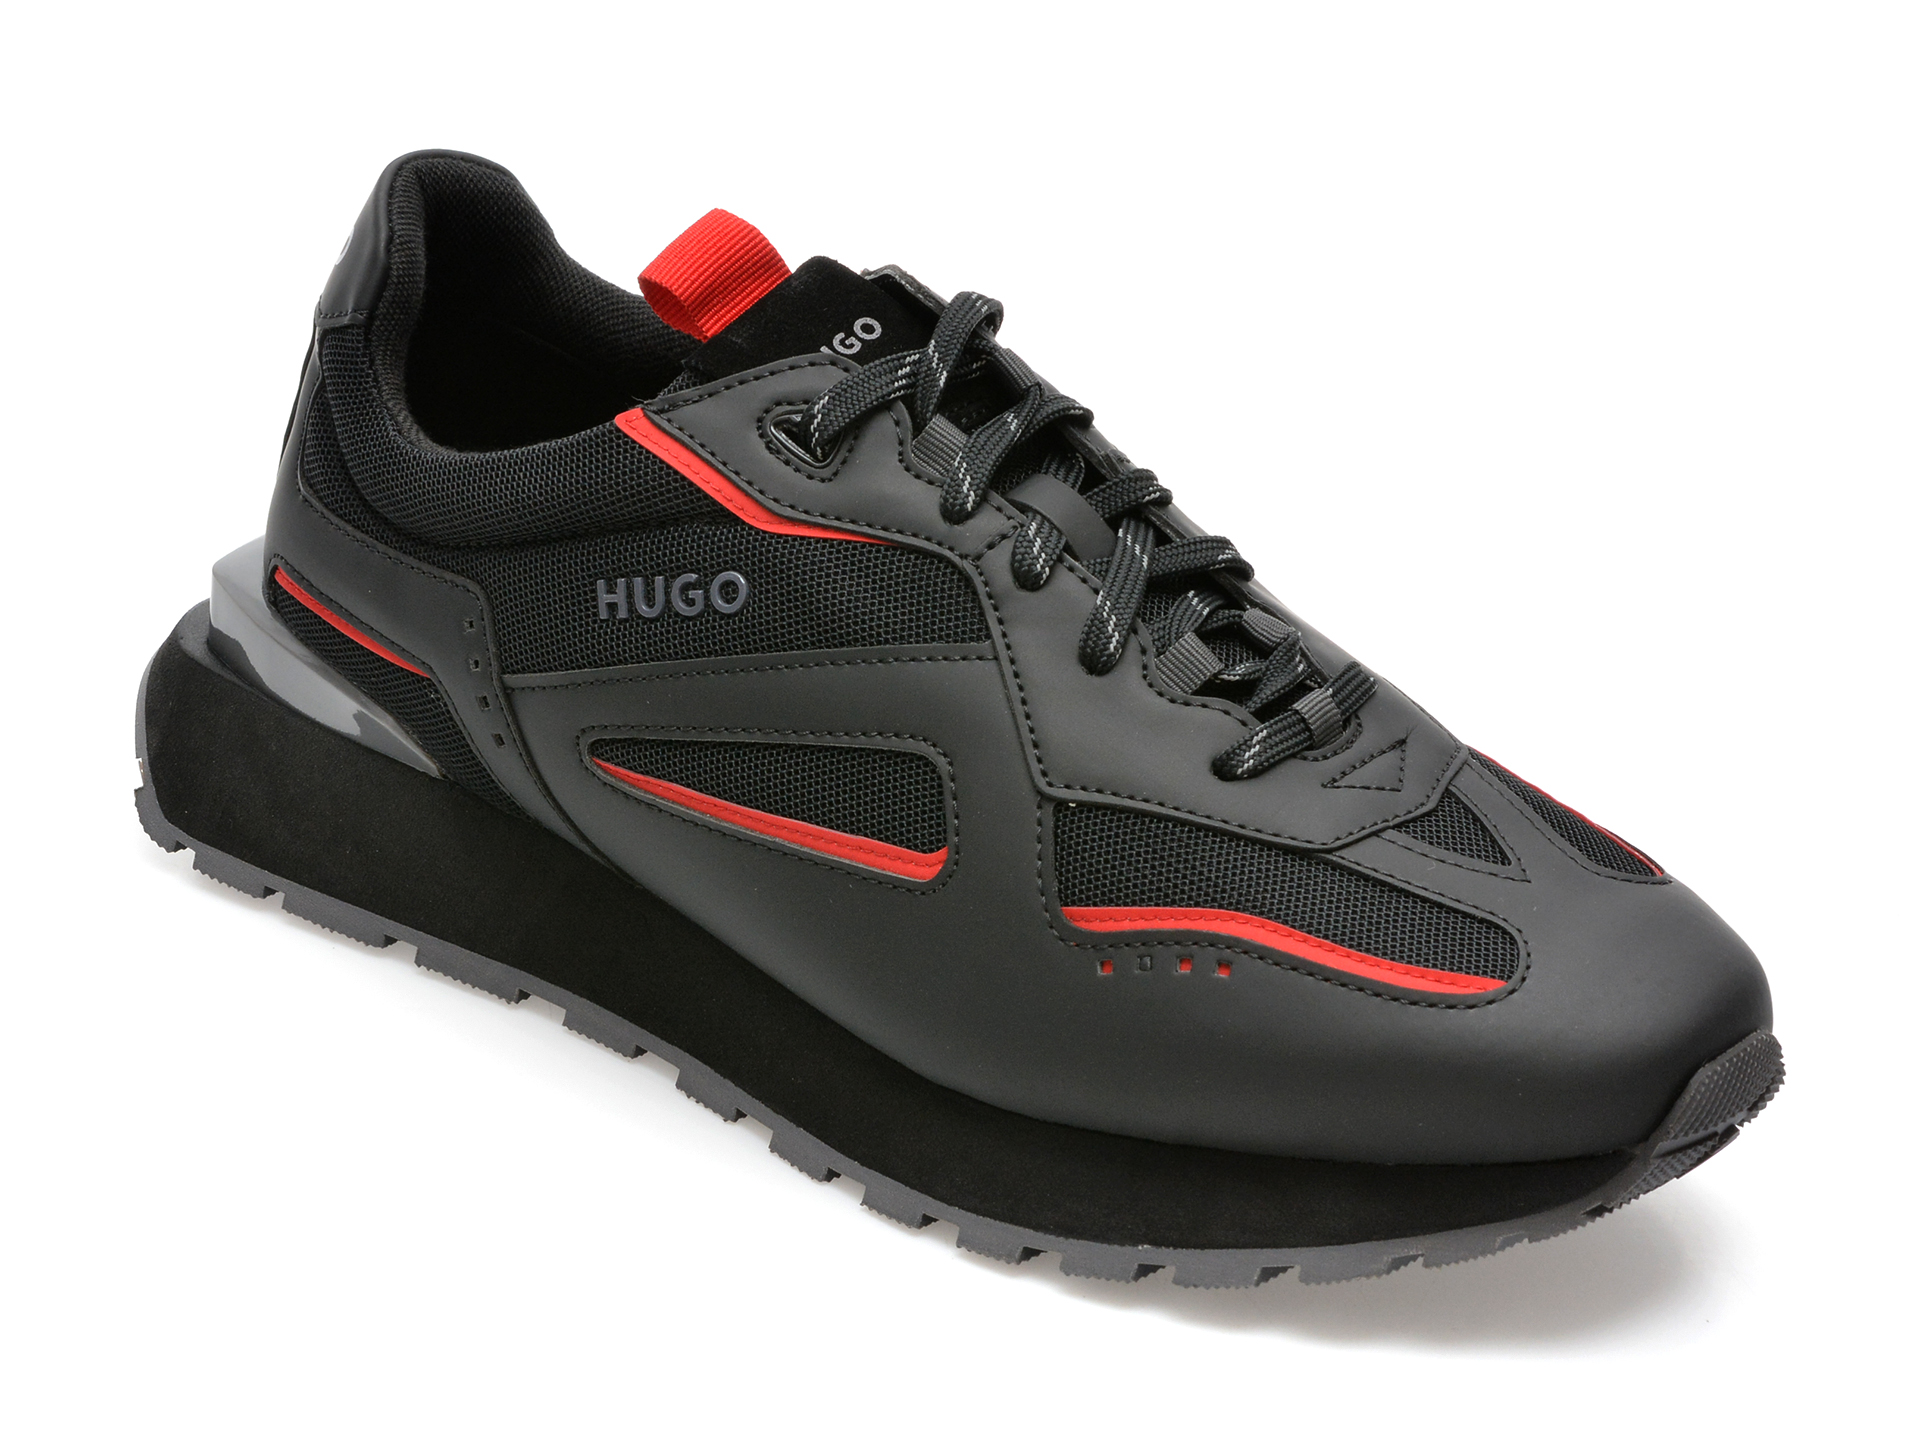 Pantofi sport HUGO BOSS negri, 463, din material textil si piele ecologica barbati 2023-03-19